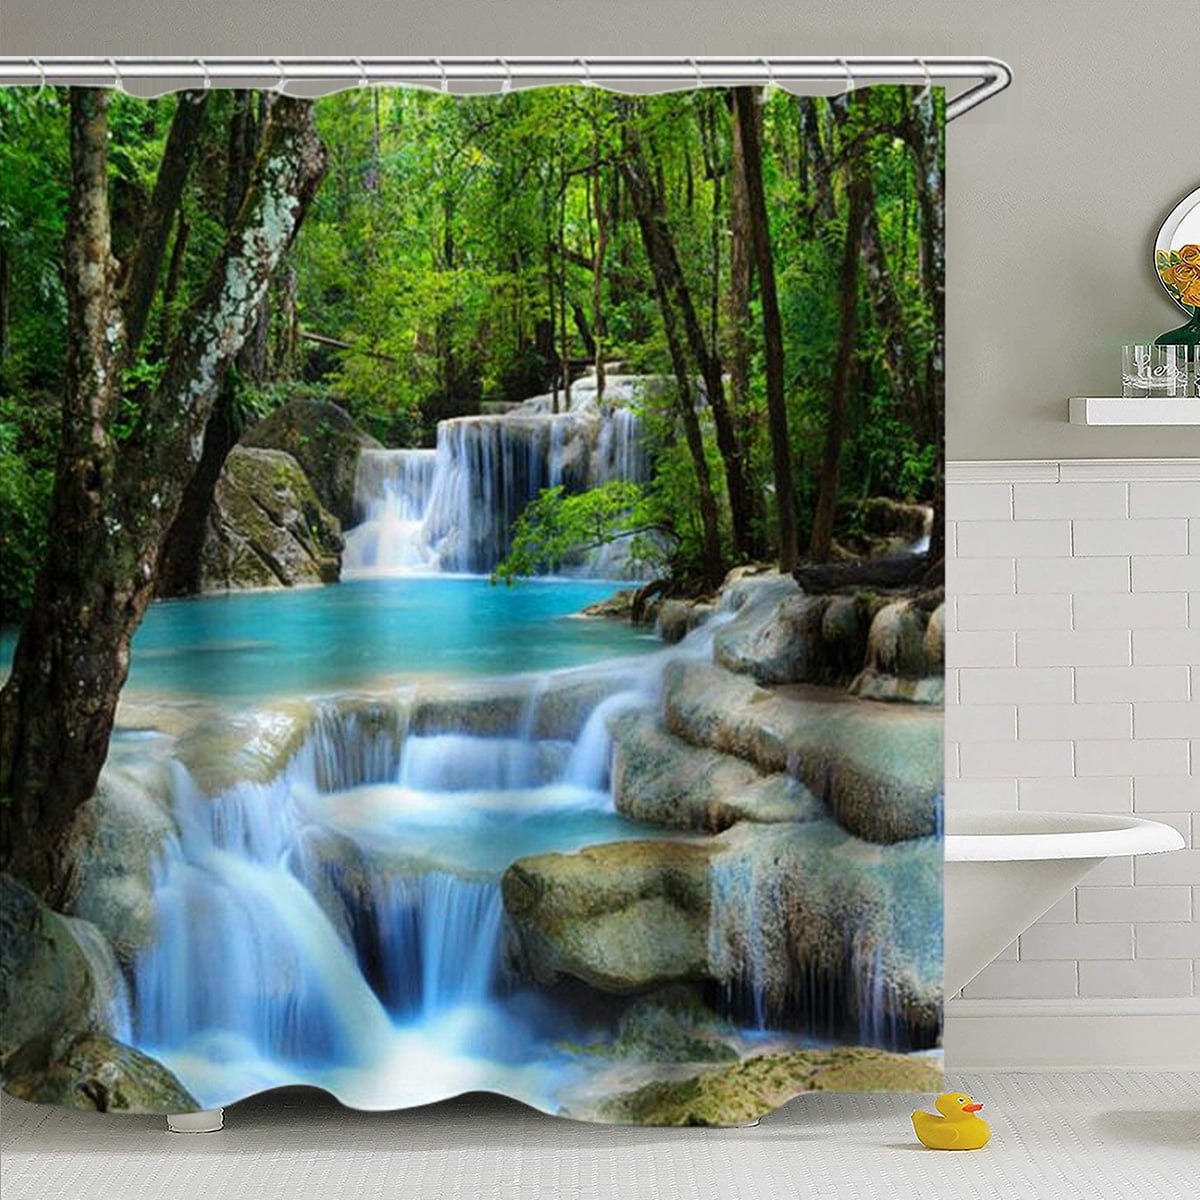 Summer Green Forest Shower Curtain Liner Bathroom Set Mat Polyester Fabric Hooks